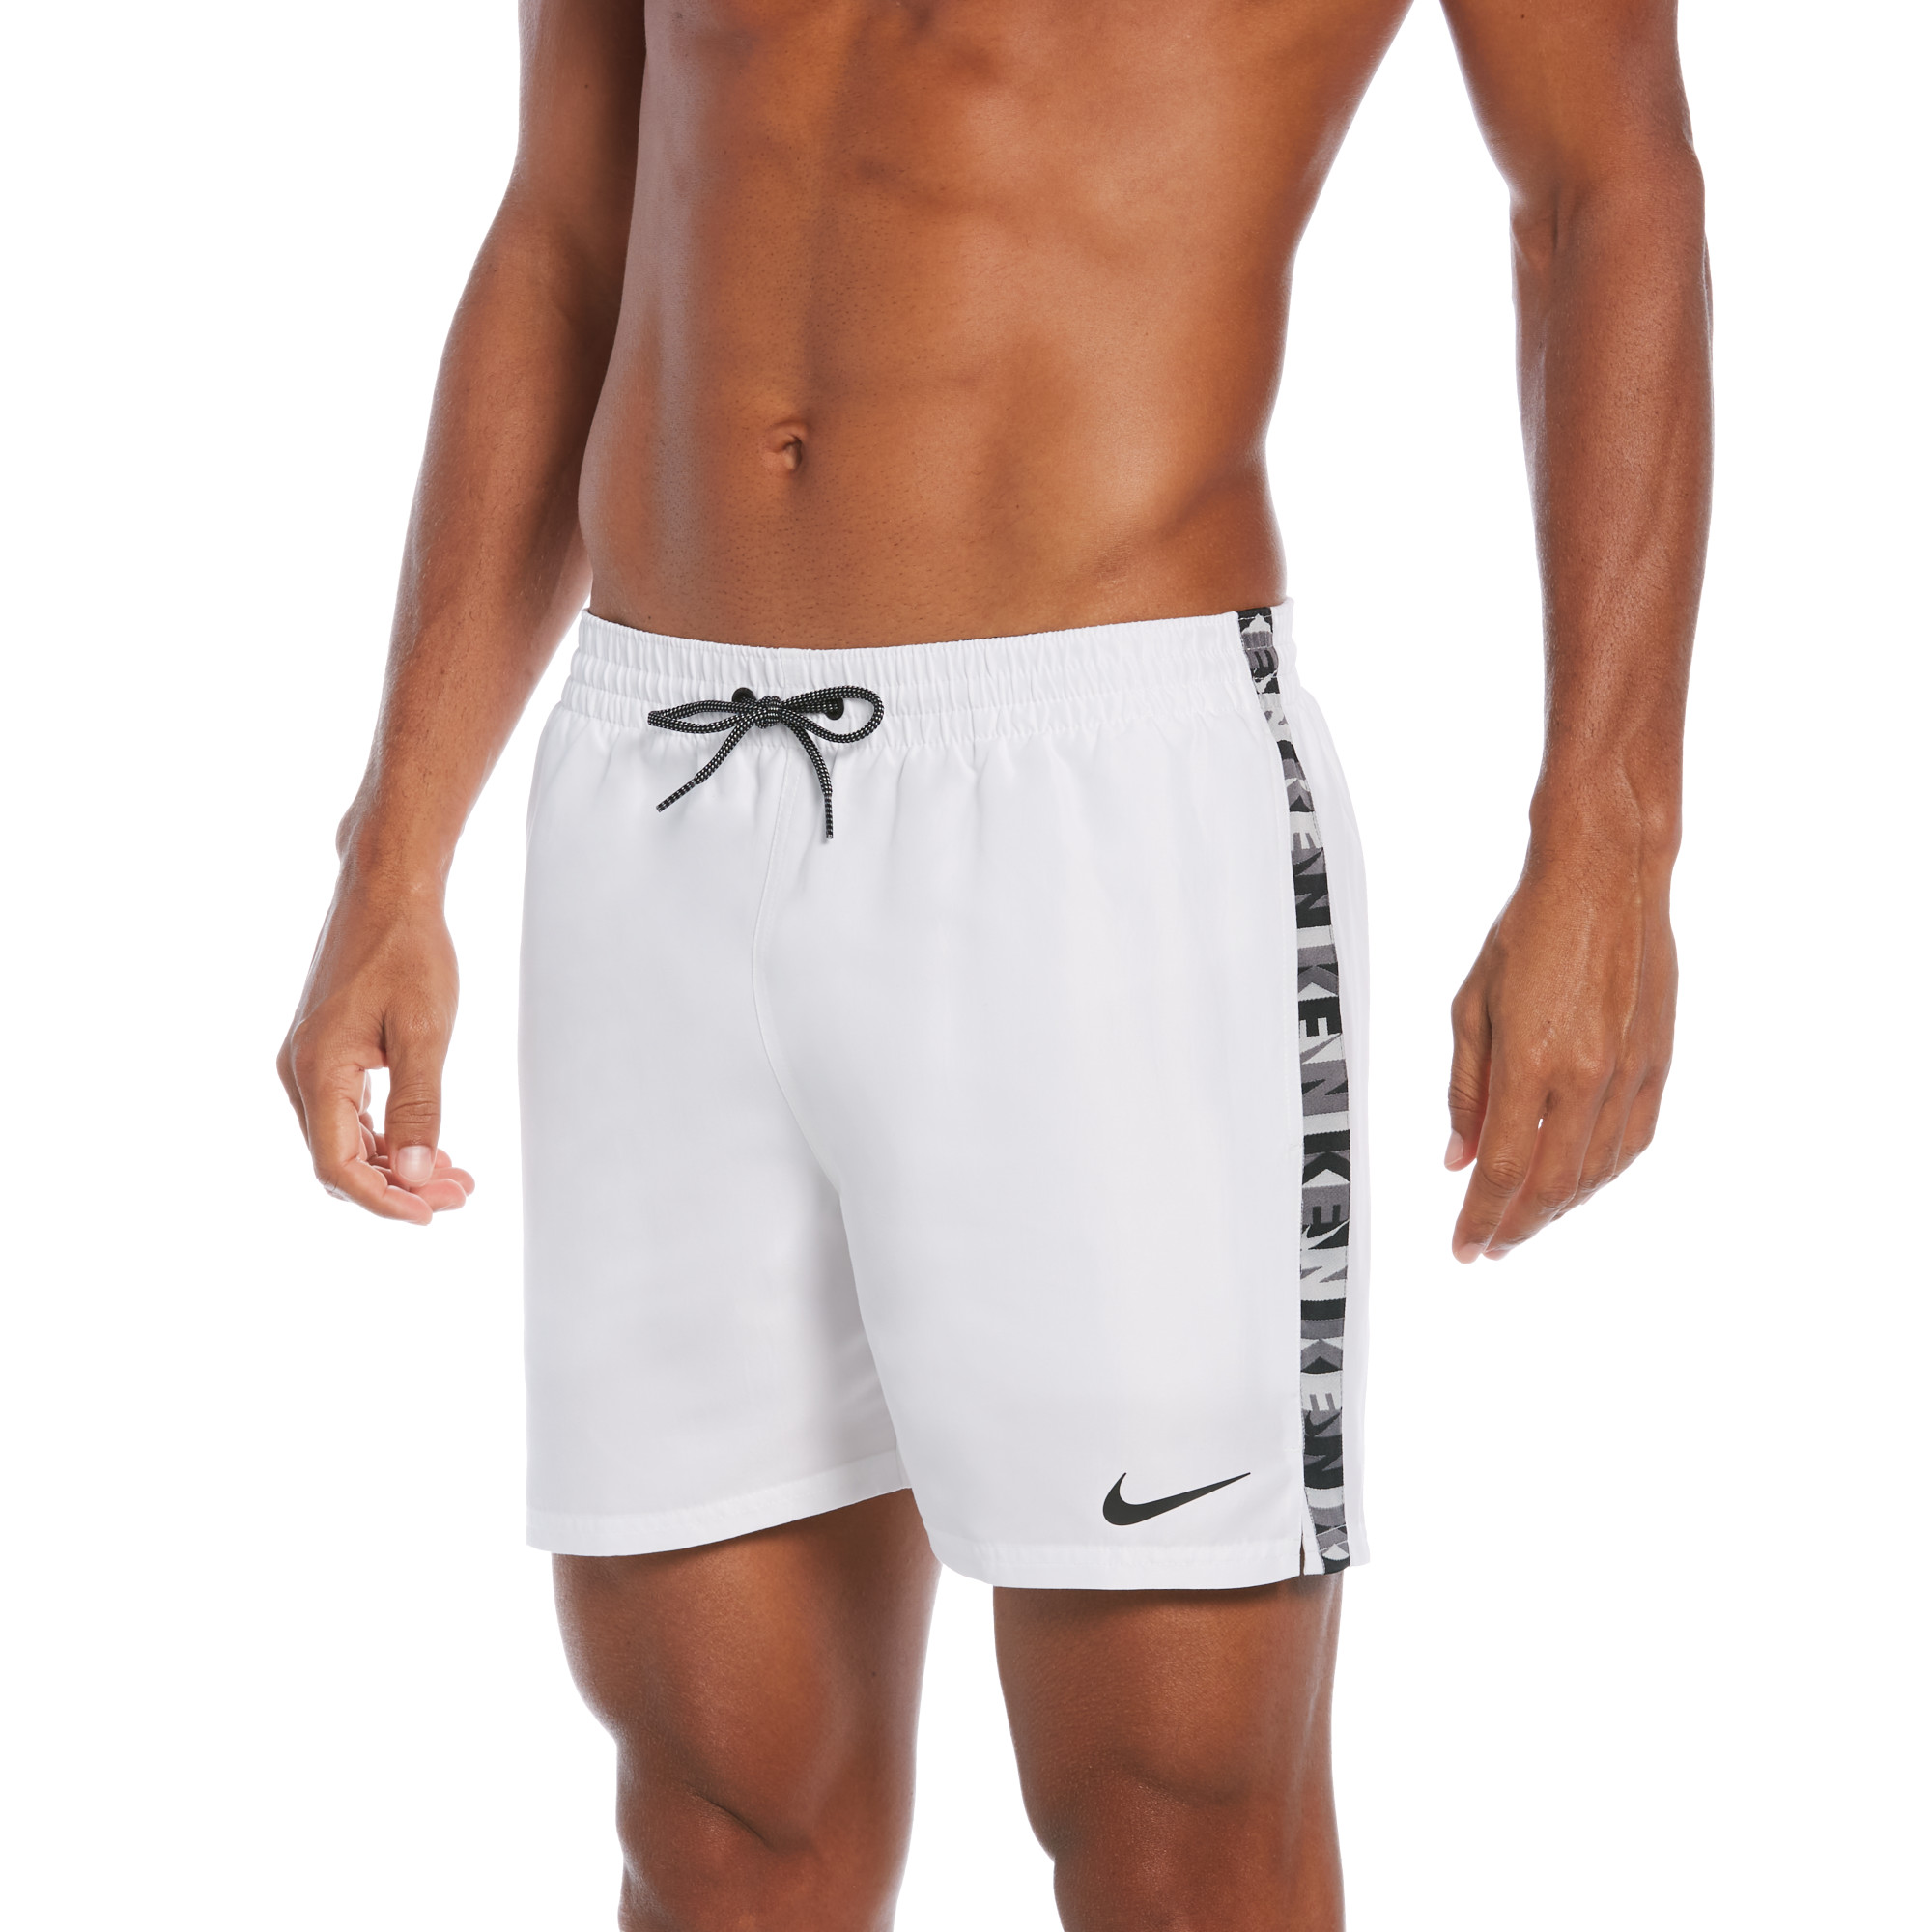 Шорты мужские Nike Swim NESSC473 белые S